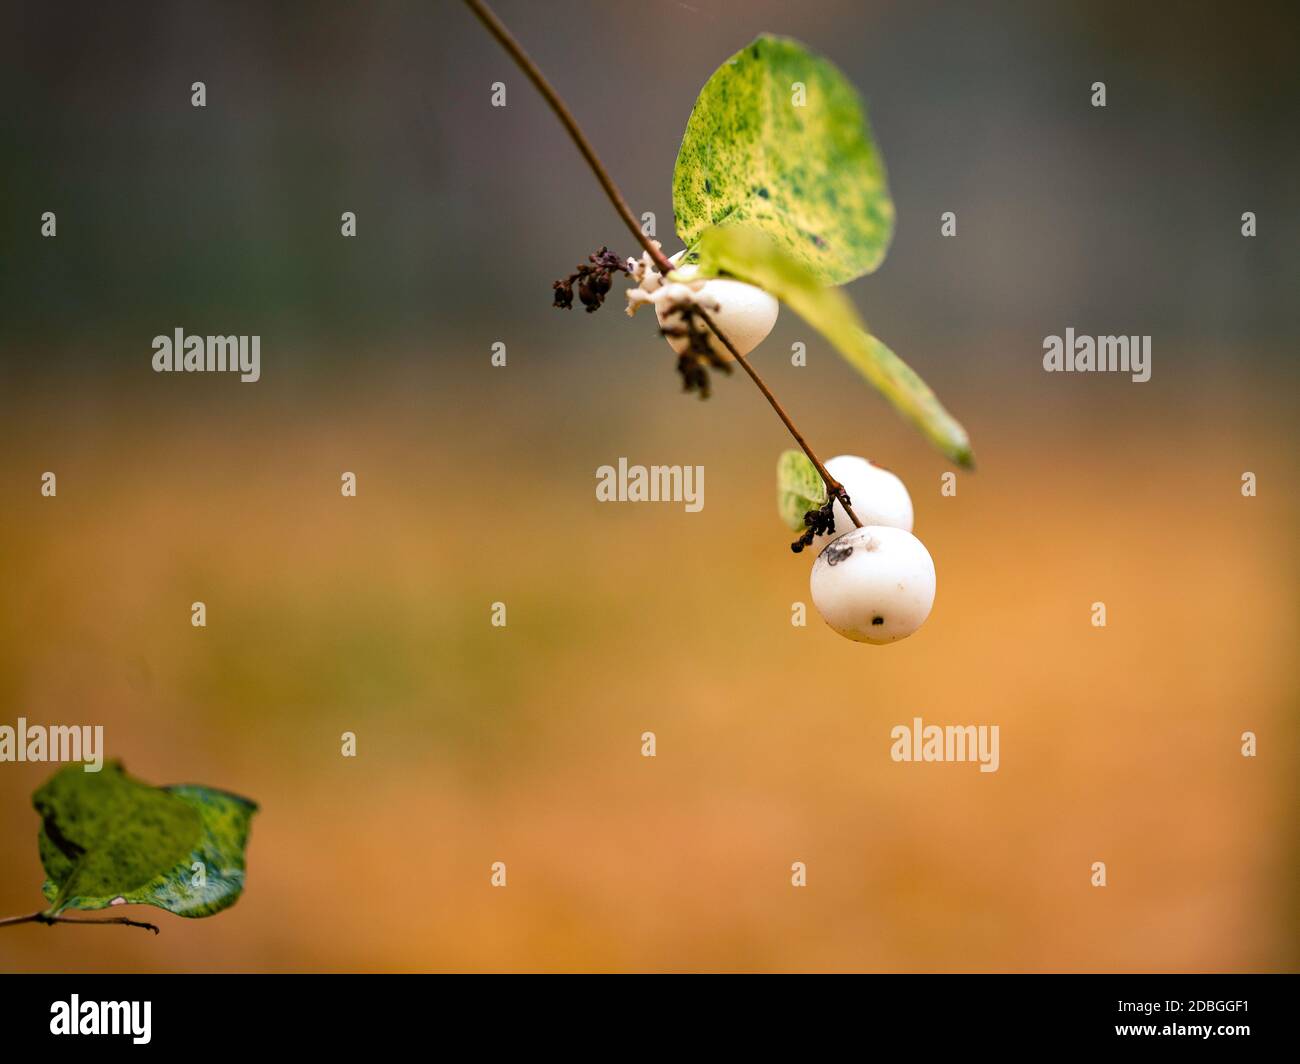 White berries on autumnal background Stock Photo